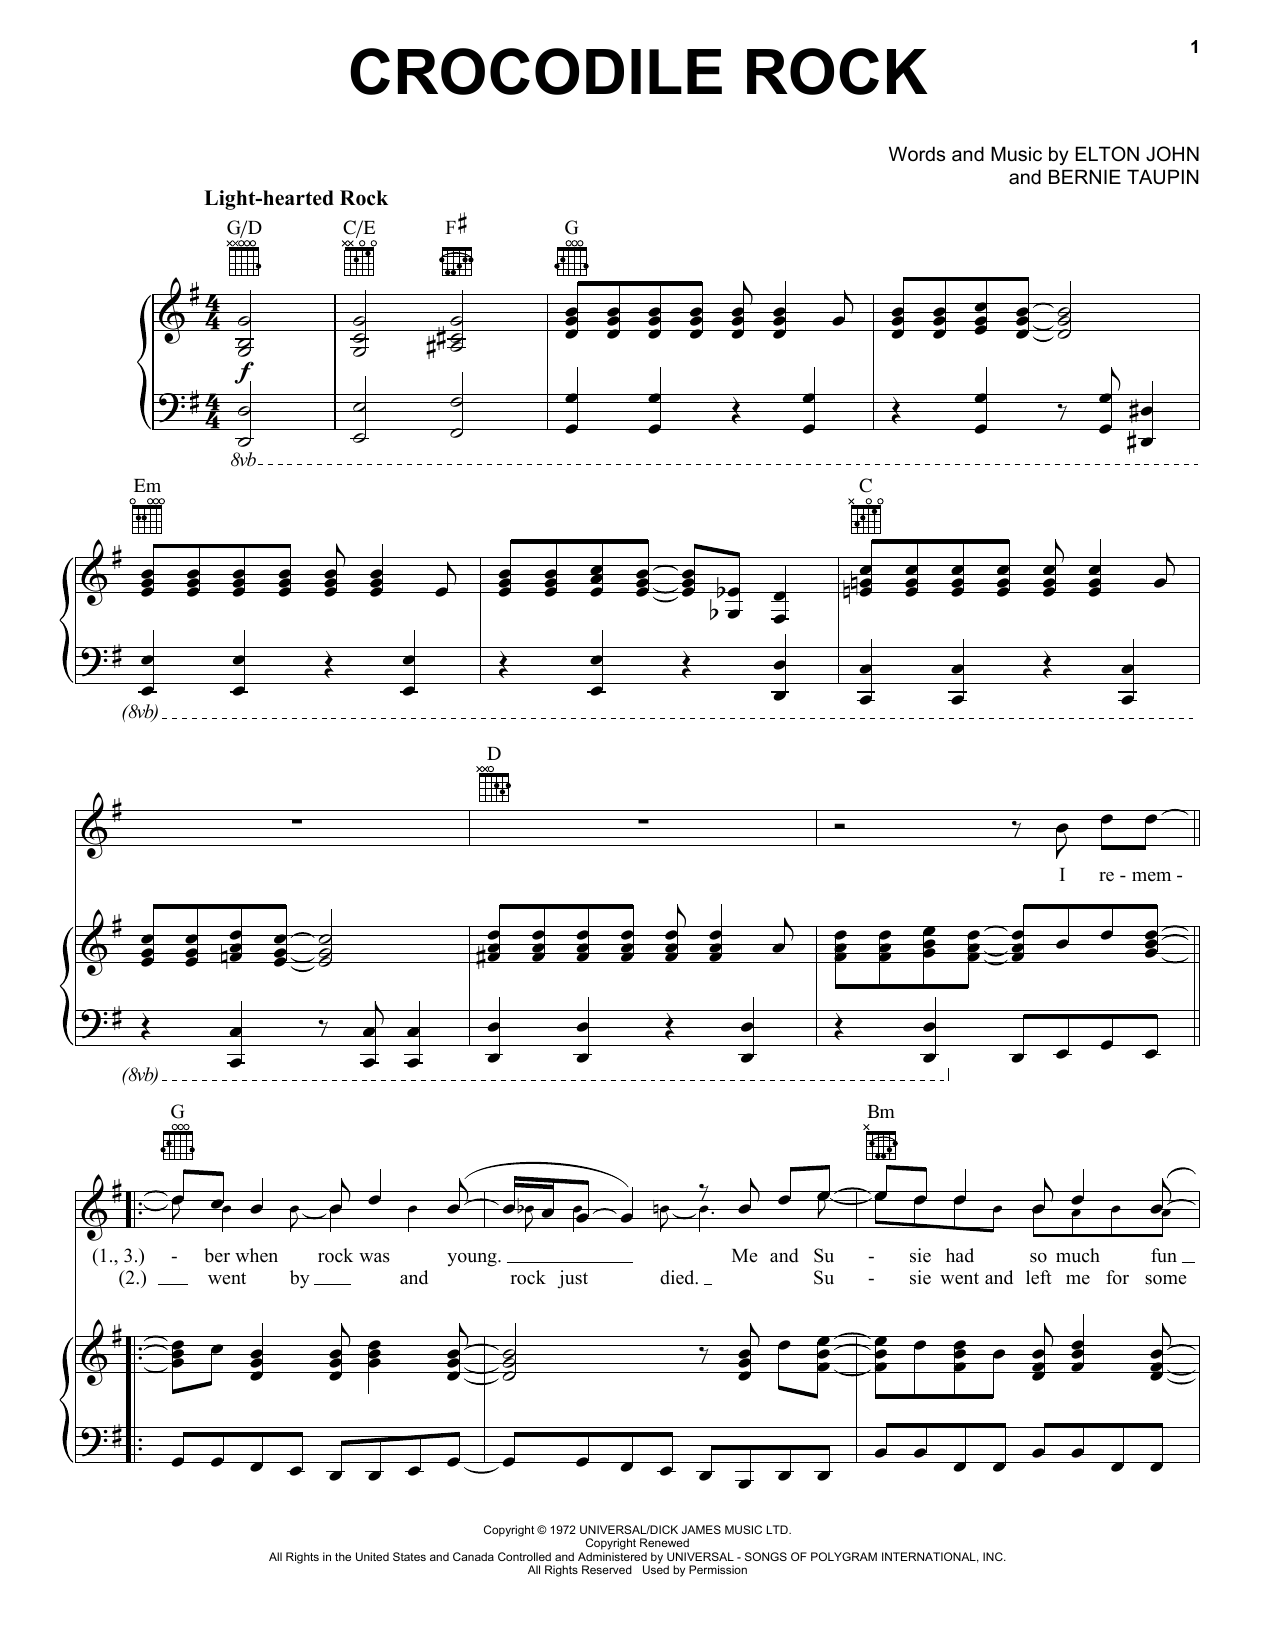 Elton John Crocodile Rock Sheet Music Notes & Chords for Ukulele - Download or Print PDF